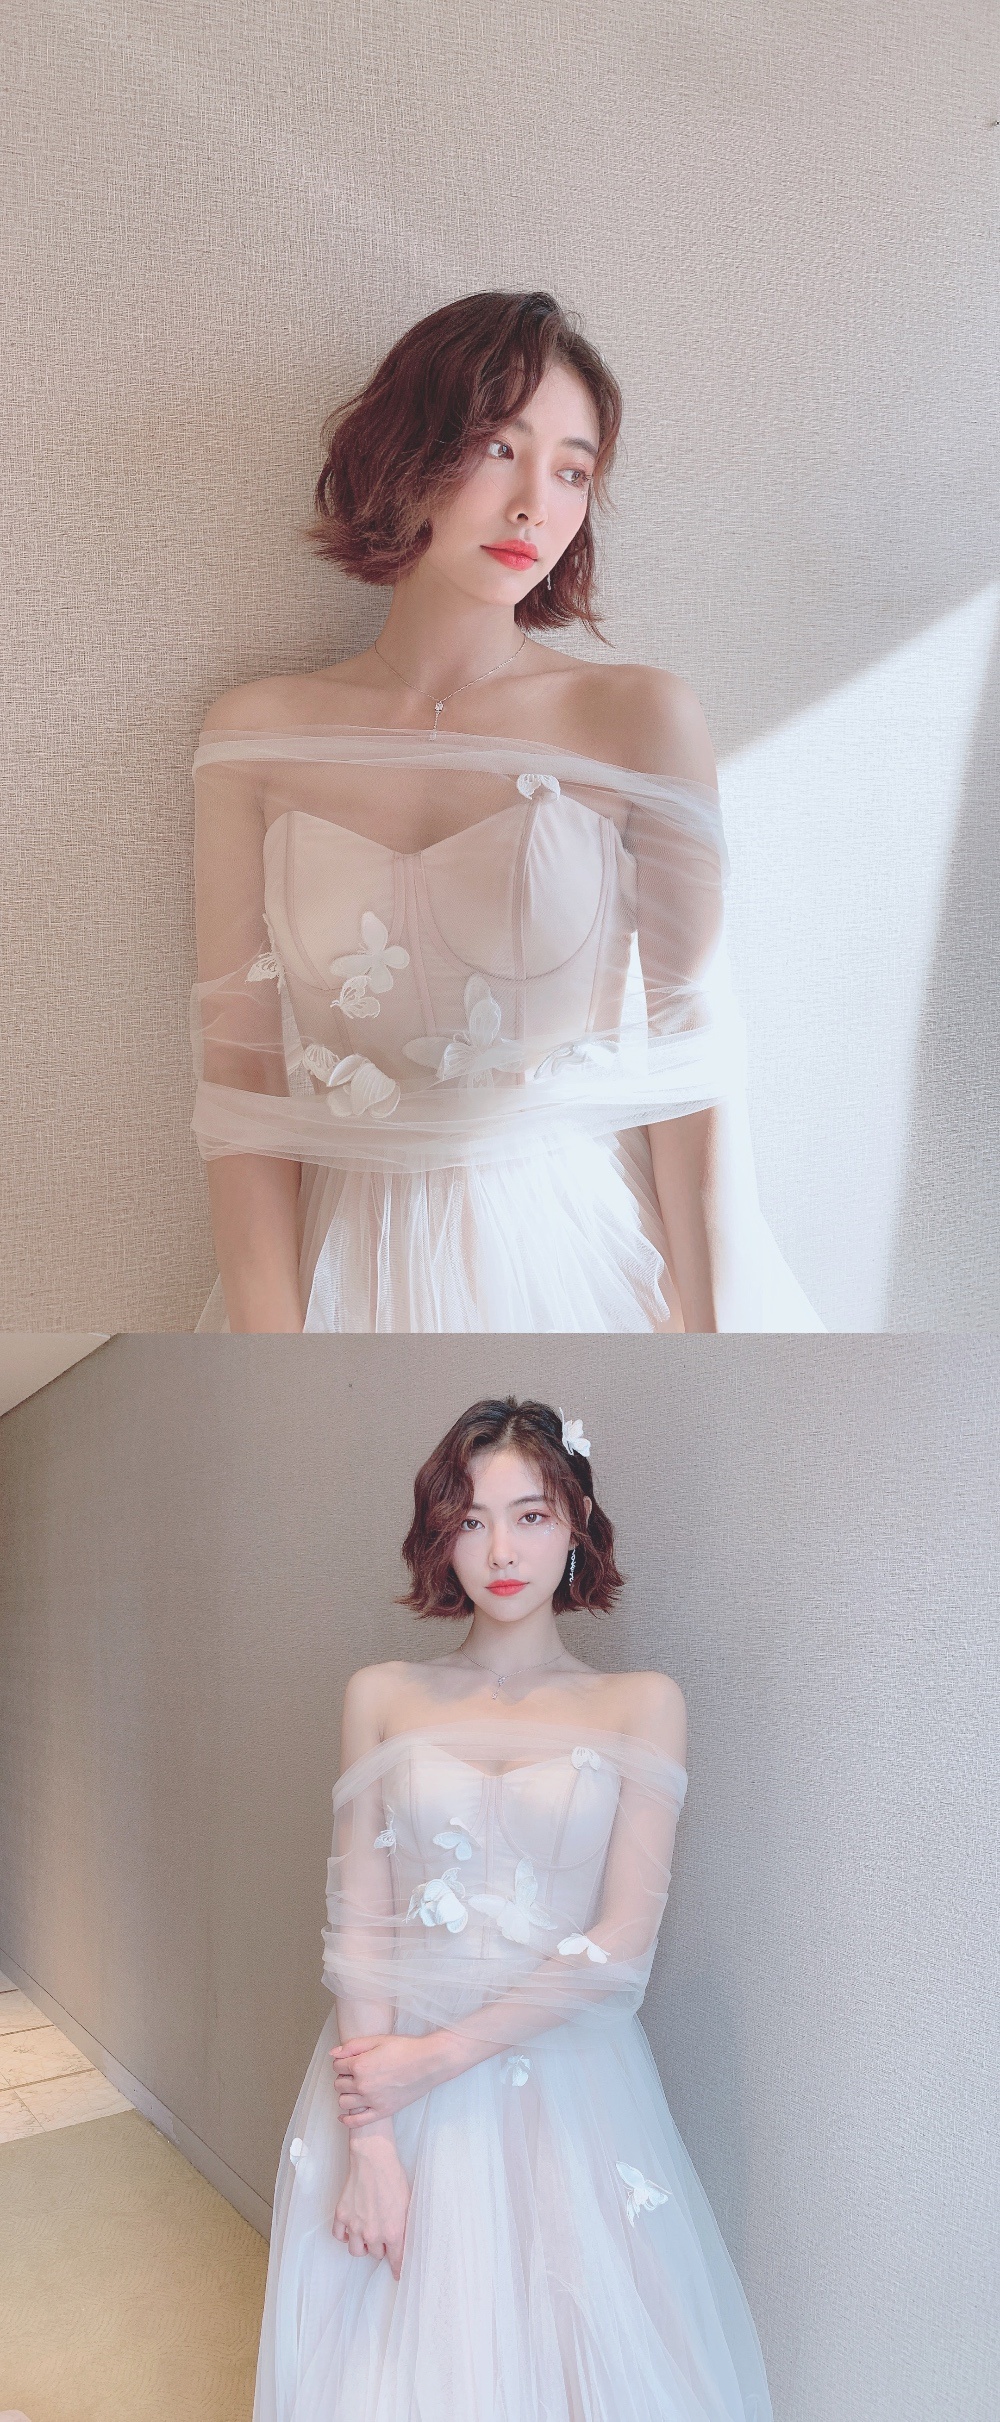 SNH48许佳琪互联网影视精品盛典性感图片